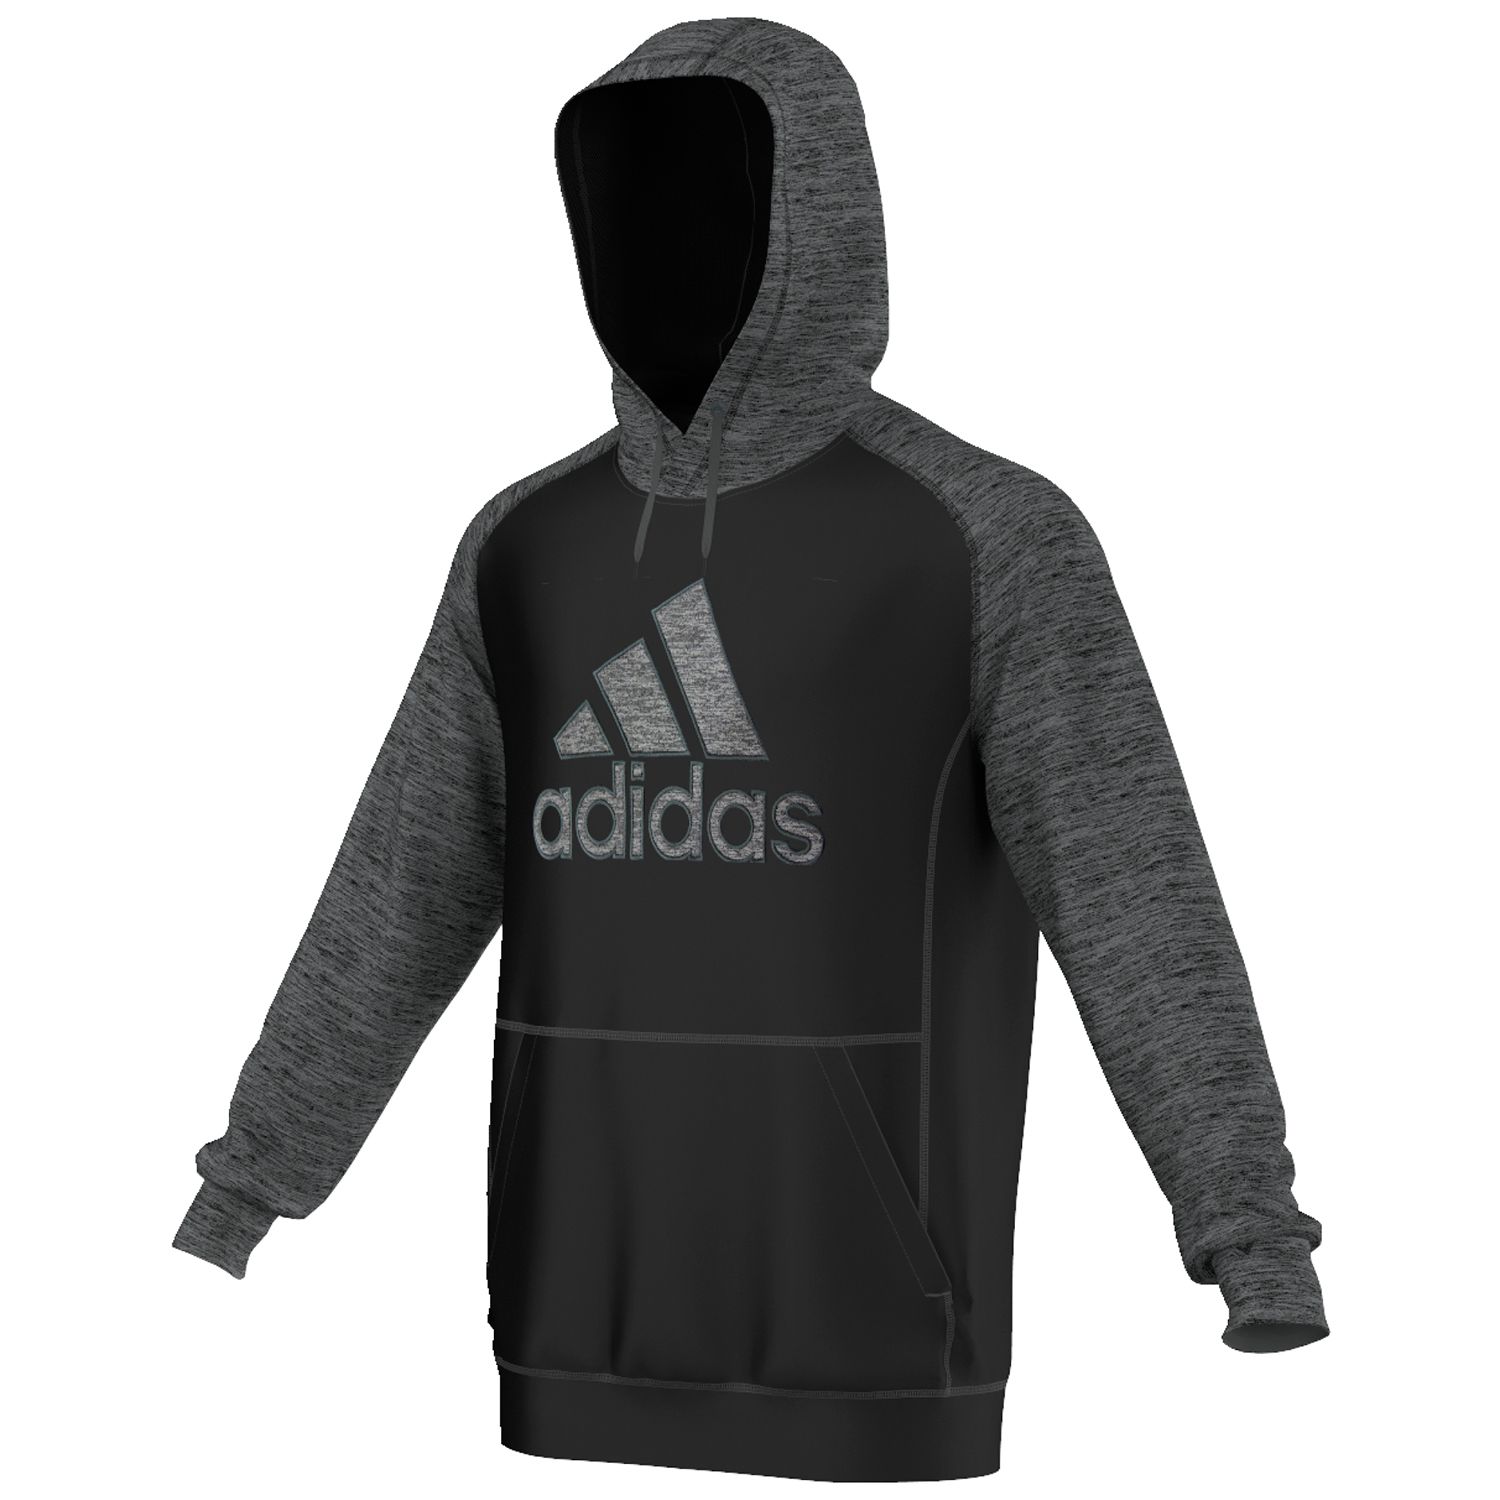 adidas climawarm team issue hoodie